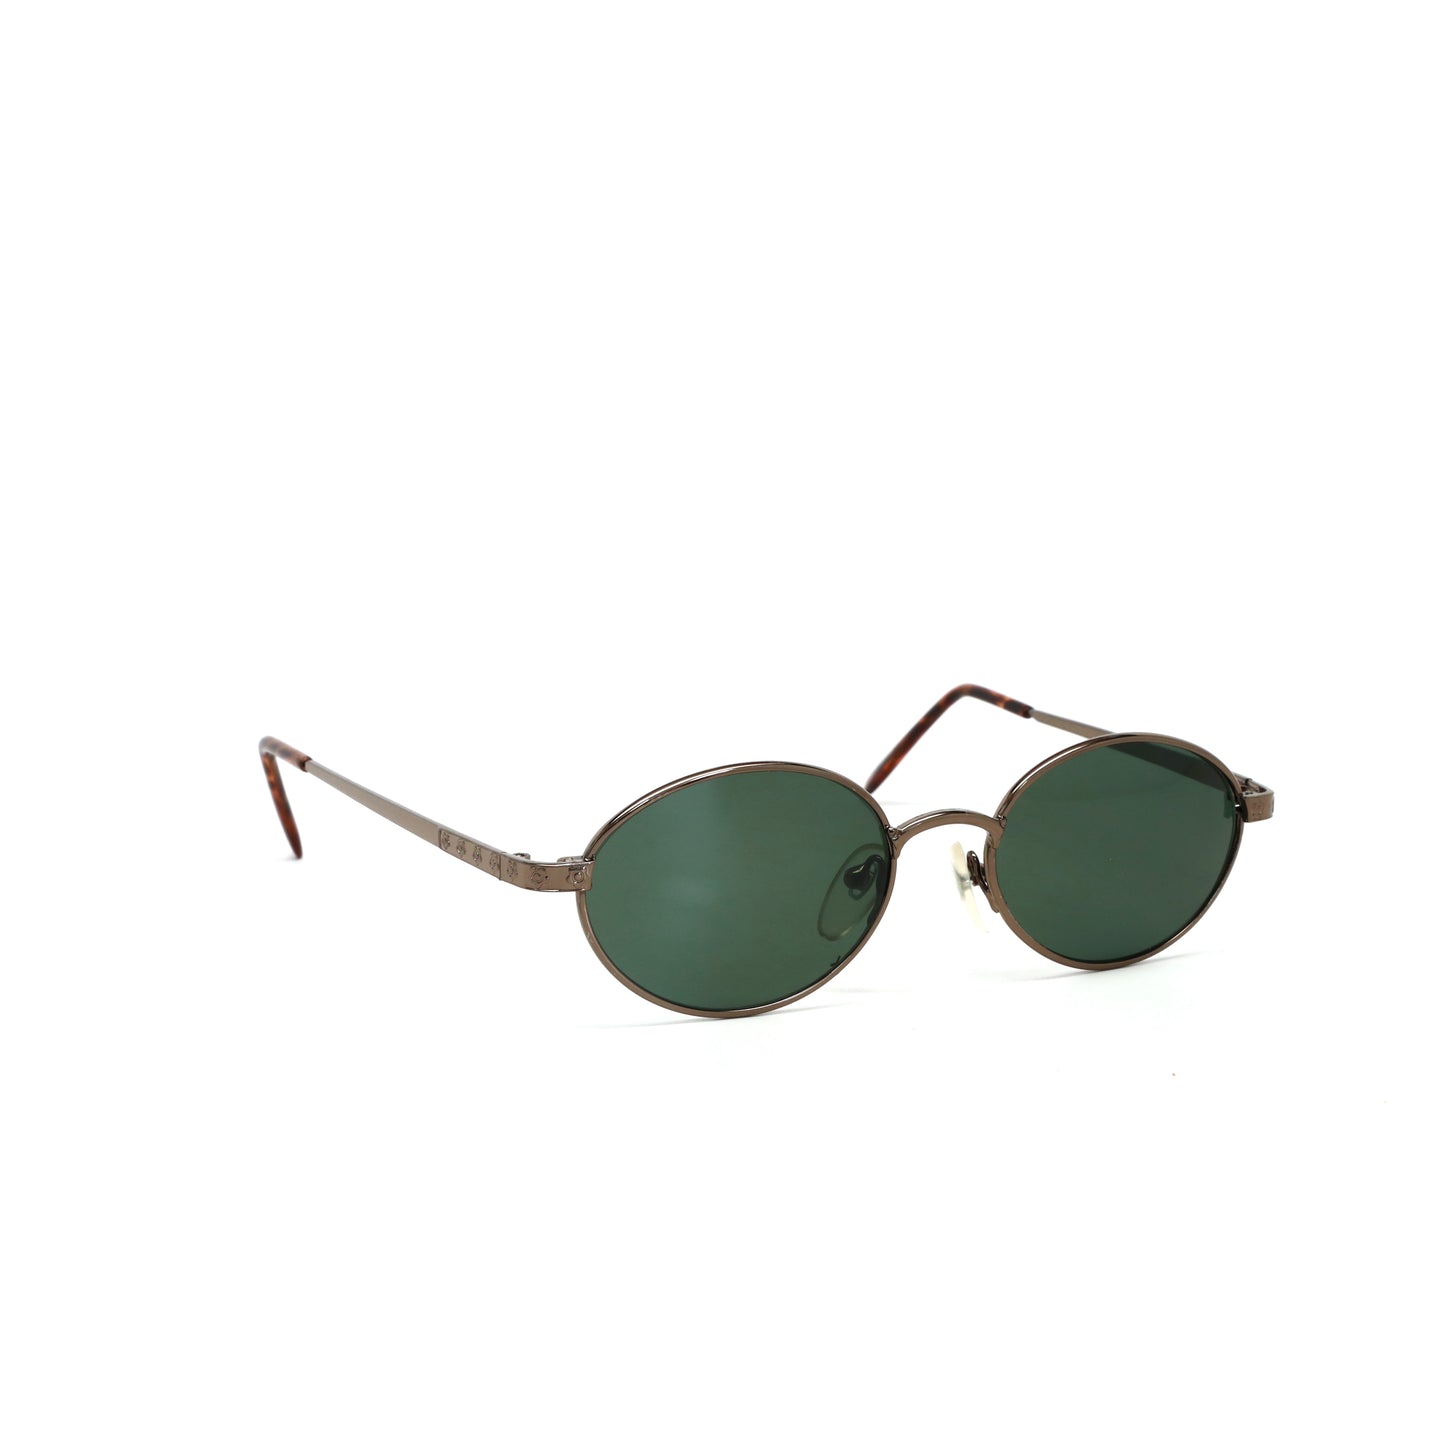 Vintage MINI Small Size 1996 Neo Standard Oval Frame Sunglasses - Bronze